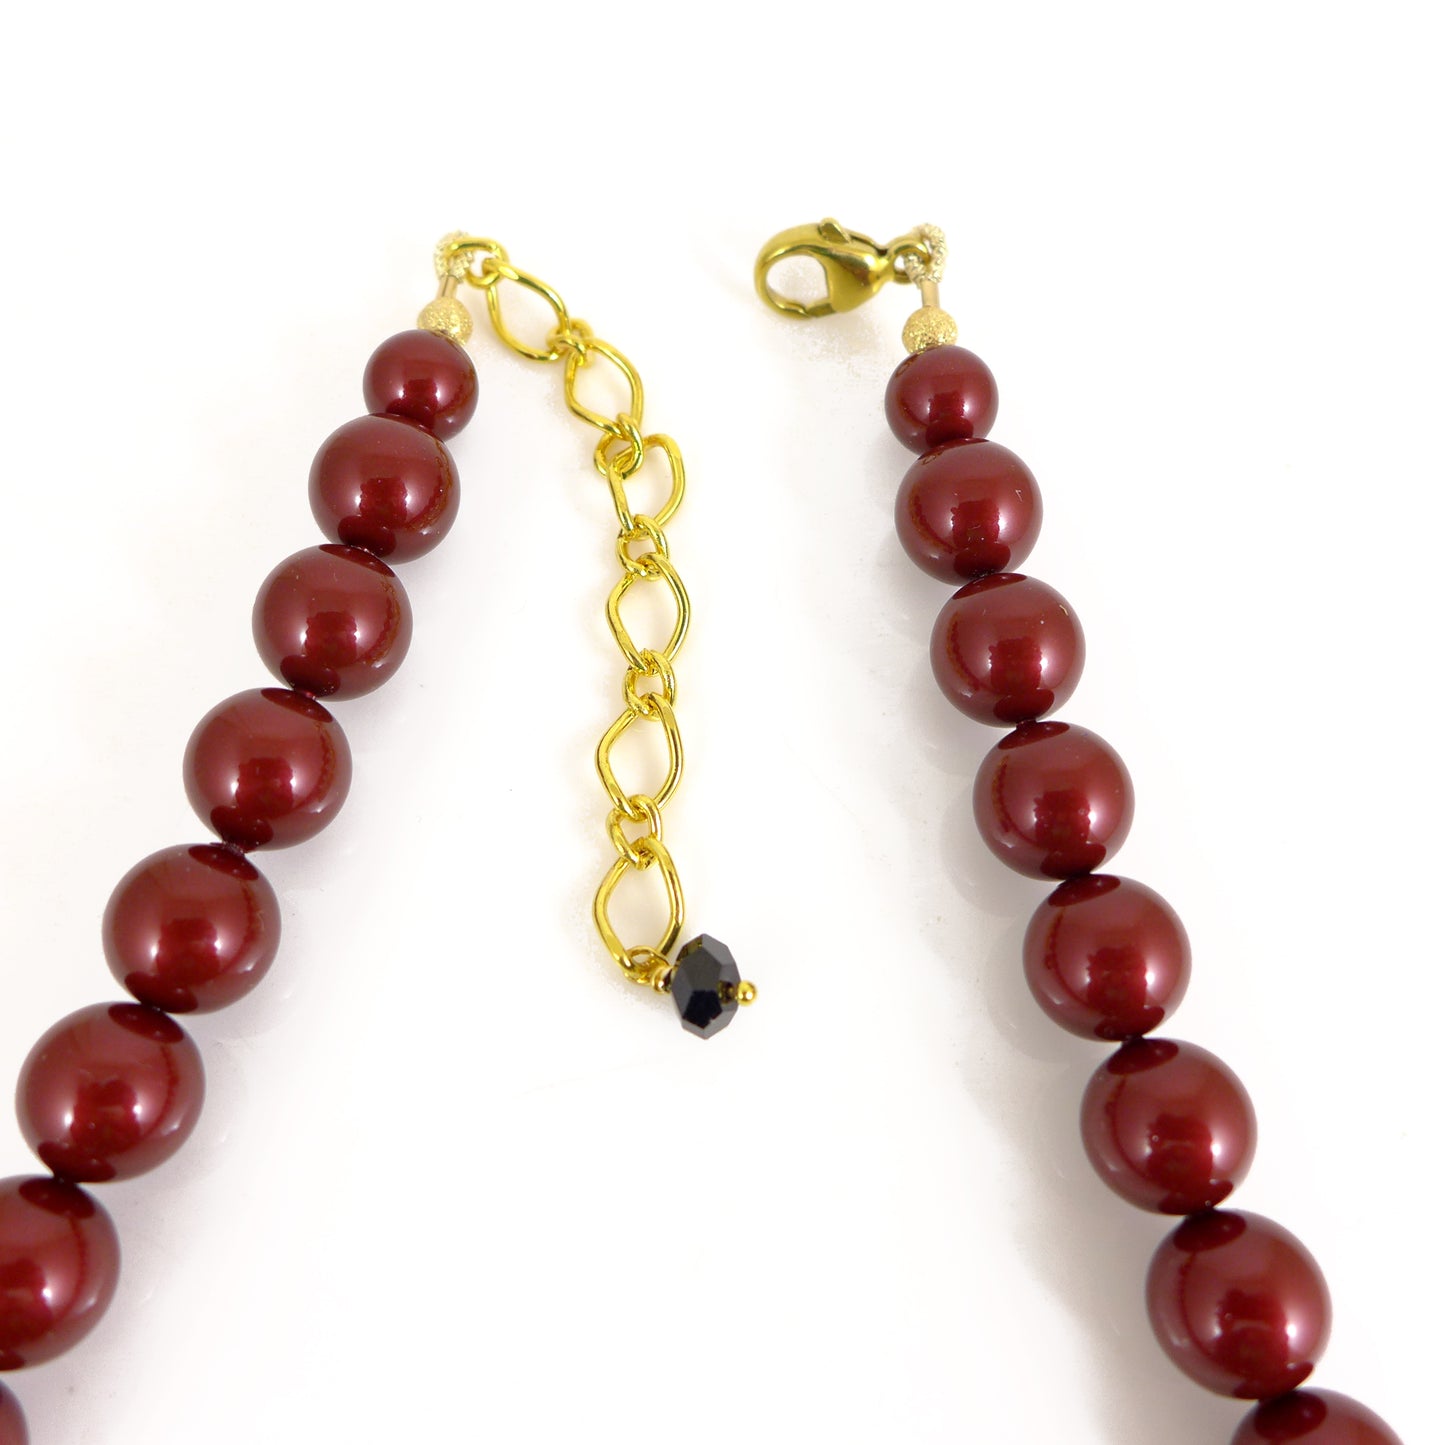 Swarovski Pearl Statement necklace - Karen Morrison Jewellery